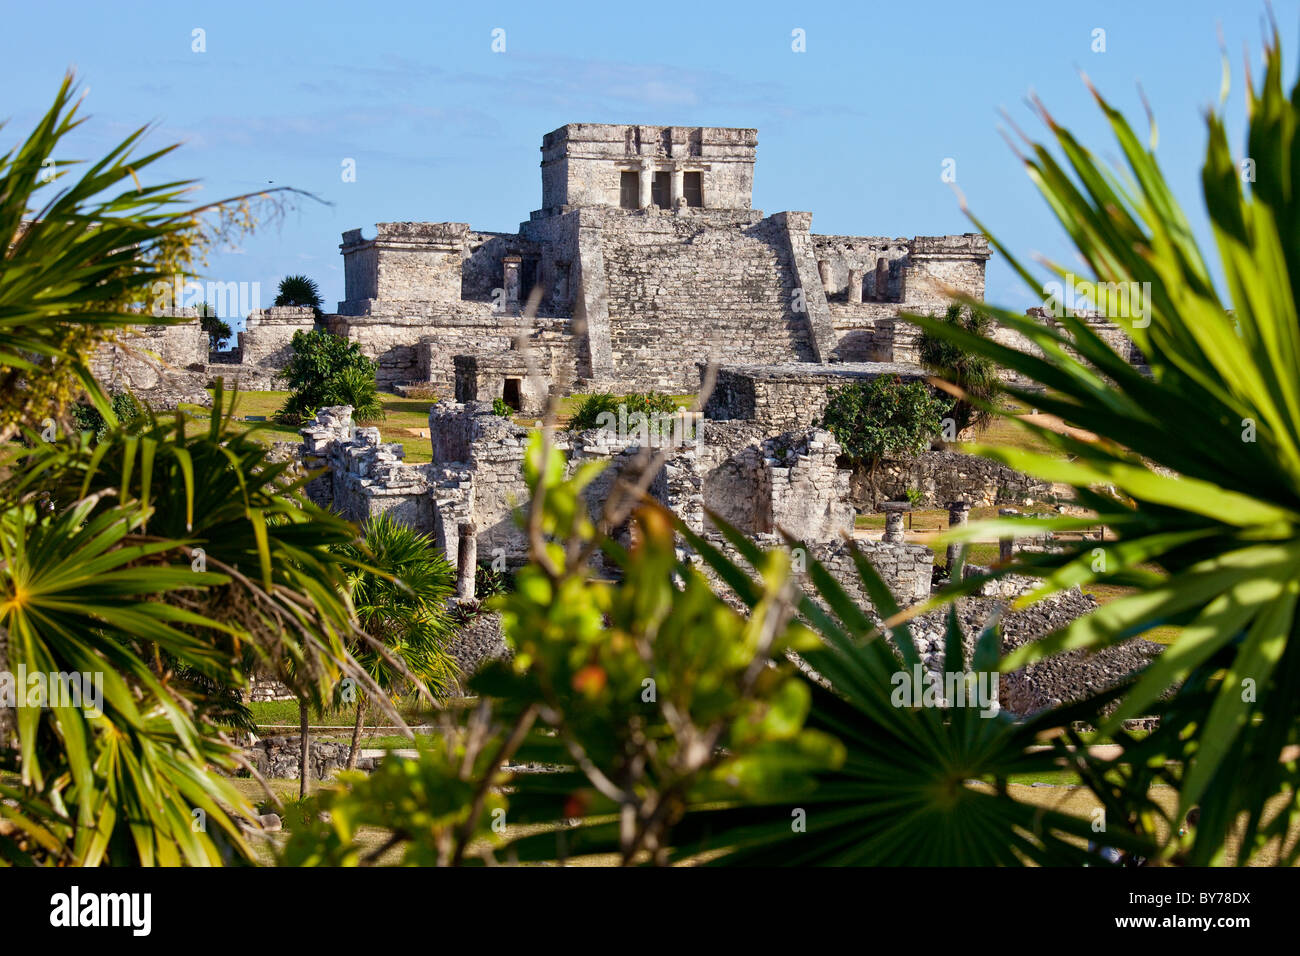 El Castillo, Tulum, Mayan ruins on the Yucatan Peninsula, Mexico Stock Photo